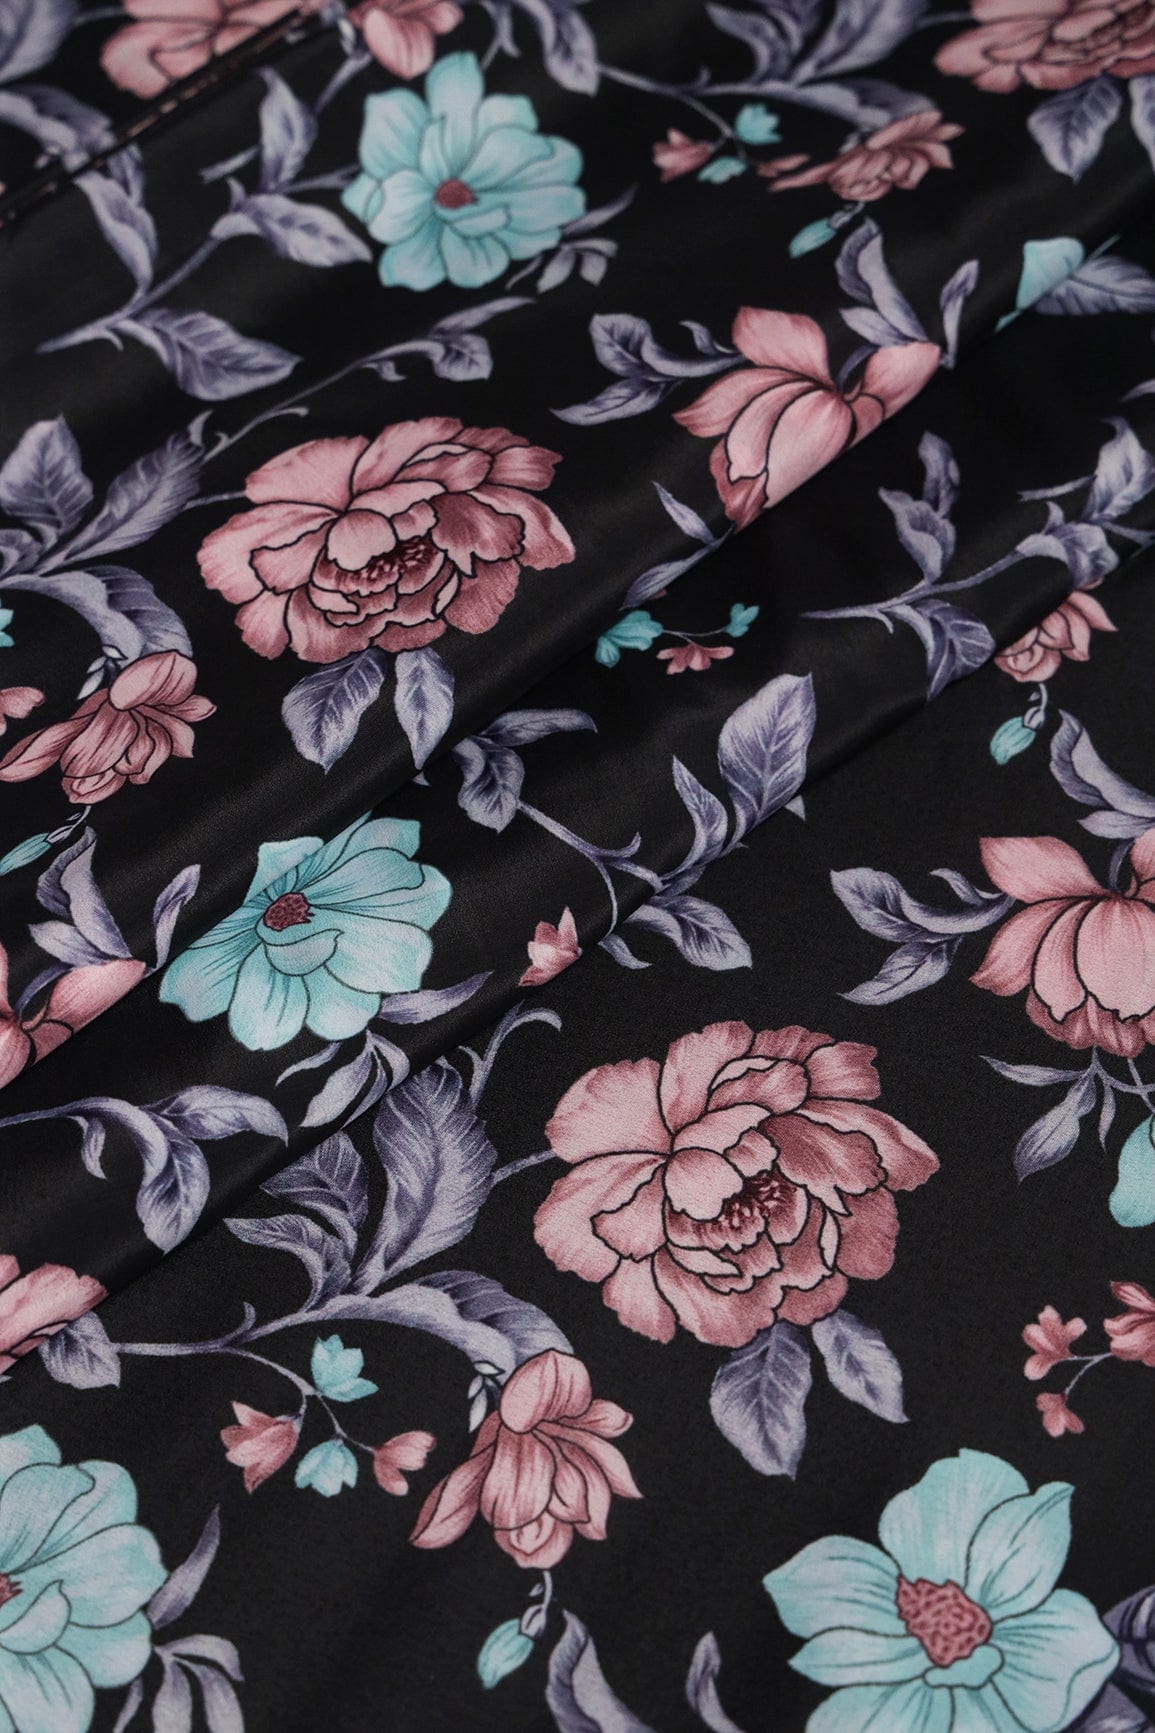 doeraa Prints Teal And Brown Floral Pattern Digital Print On Black Malai Crepe Fabric